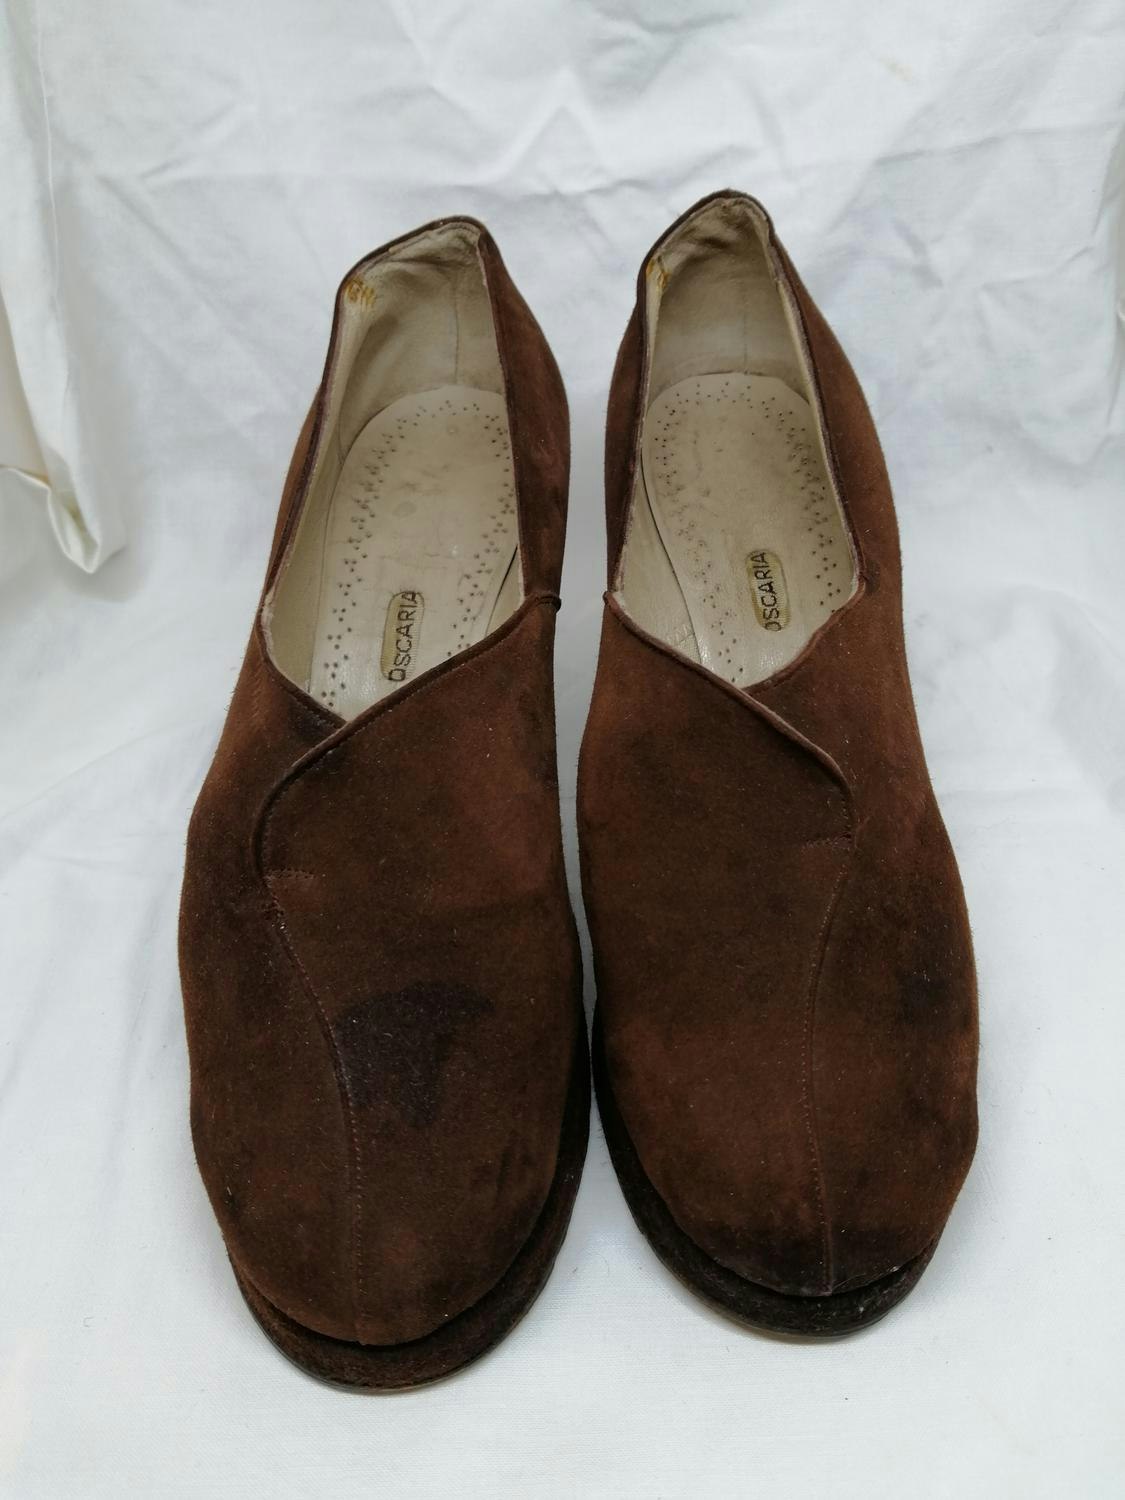 Vintage retro sko brun mocka hög bred klack 40-tal Oscaria stl 39 - Vintage  Corner Österlen